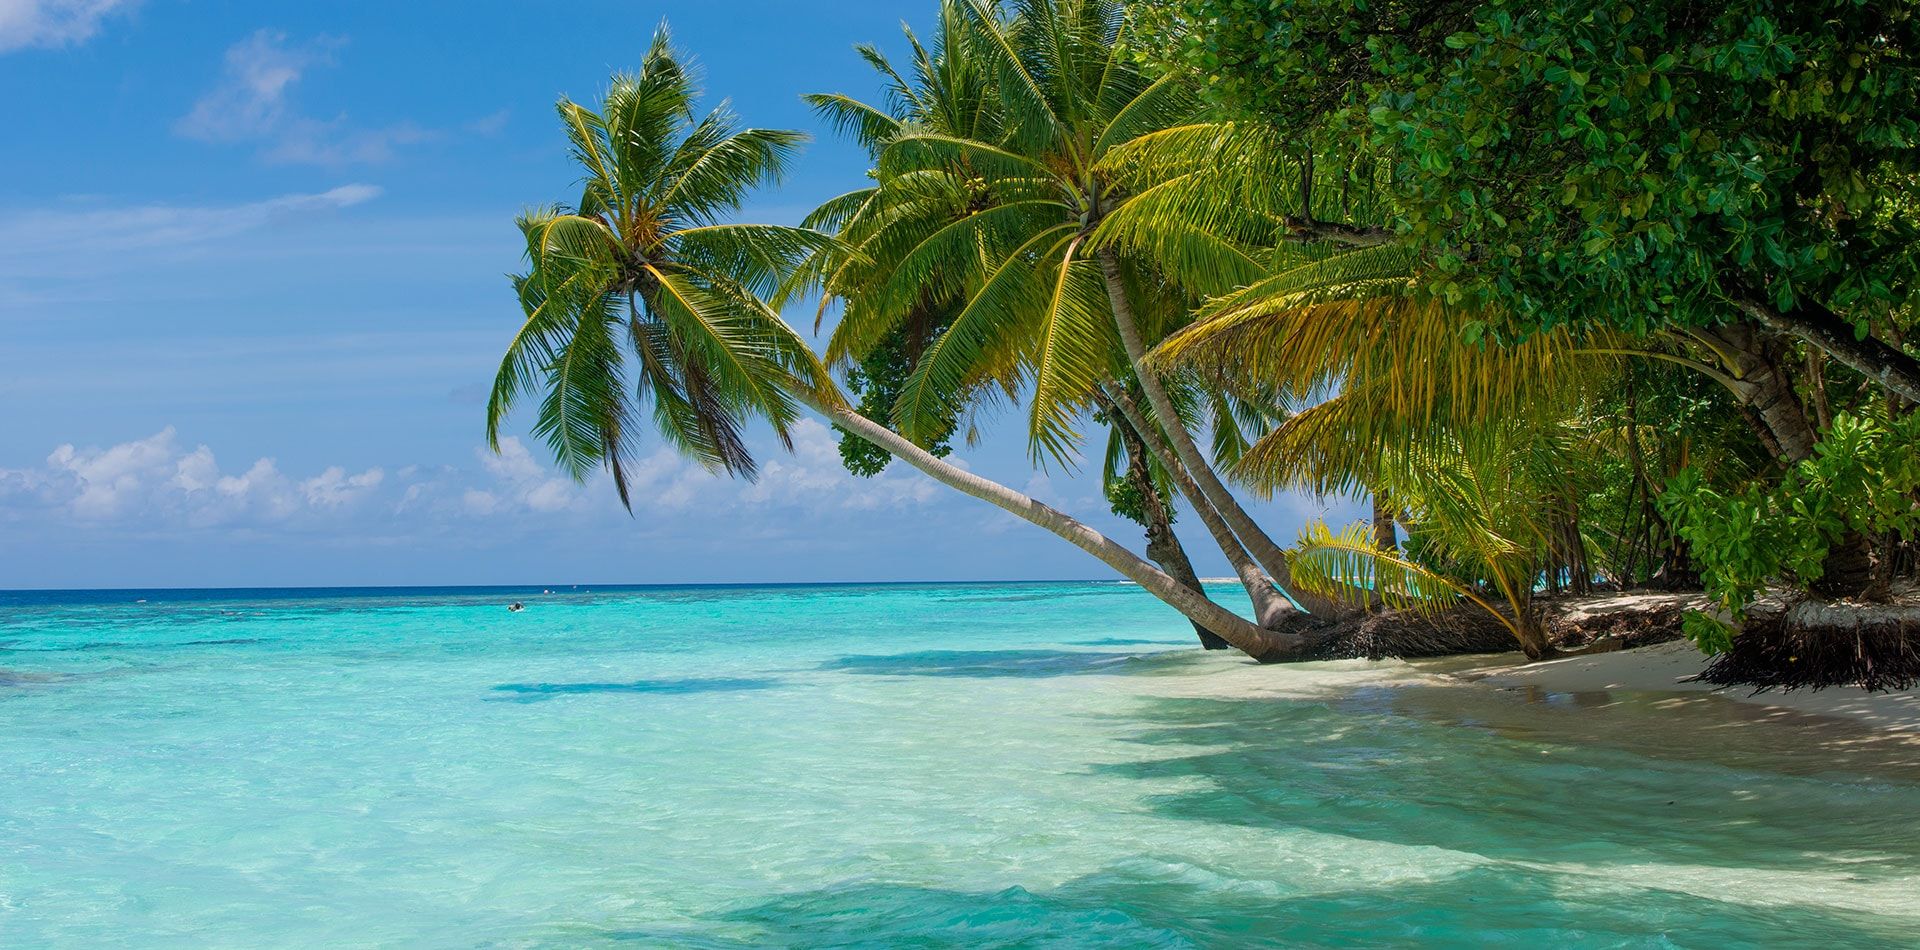 Press A major tourism challenge has been set with vanilla islands concept